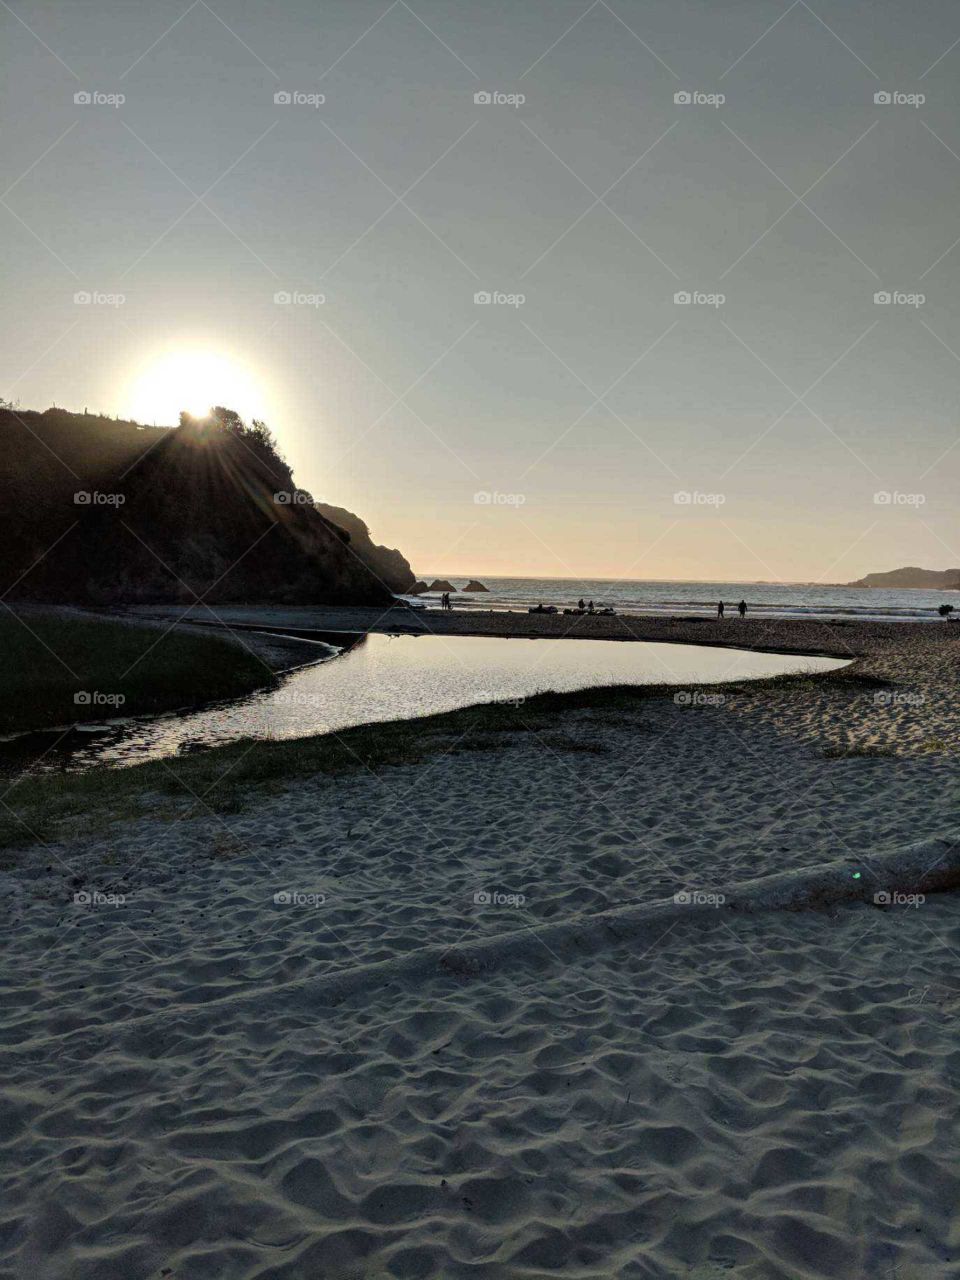 Caspar beach at sunset. Caspar, California